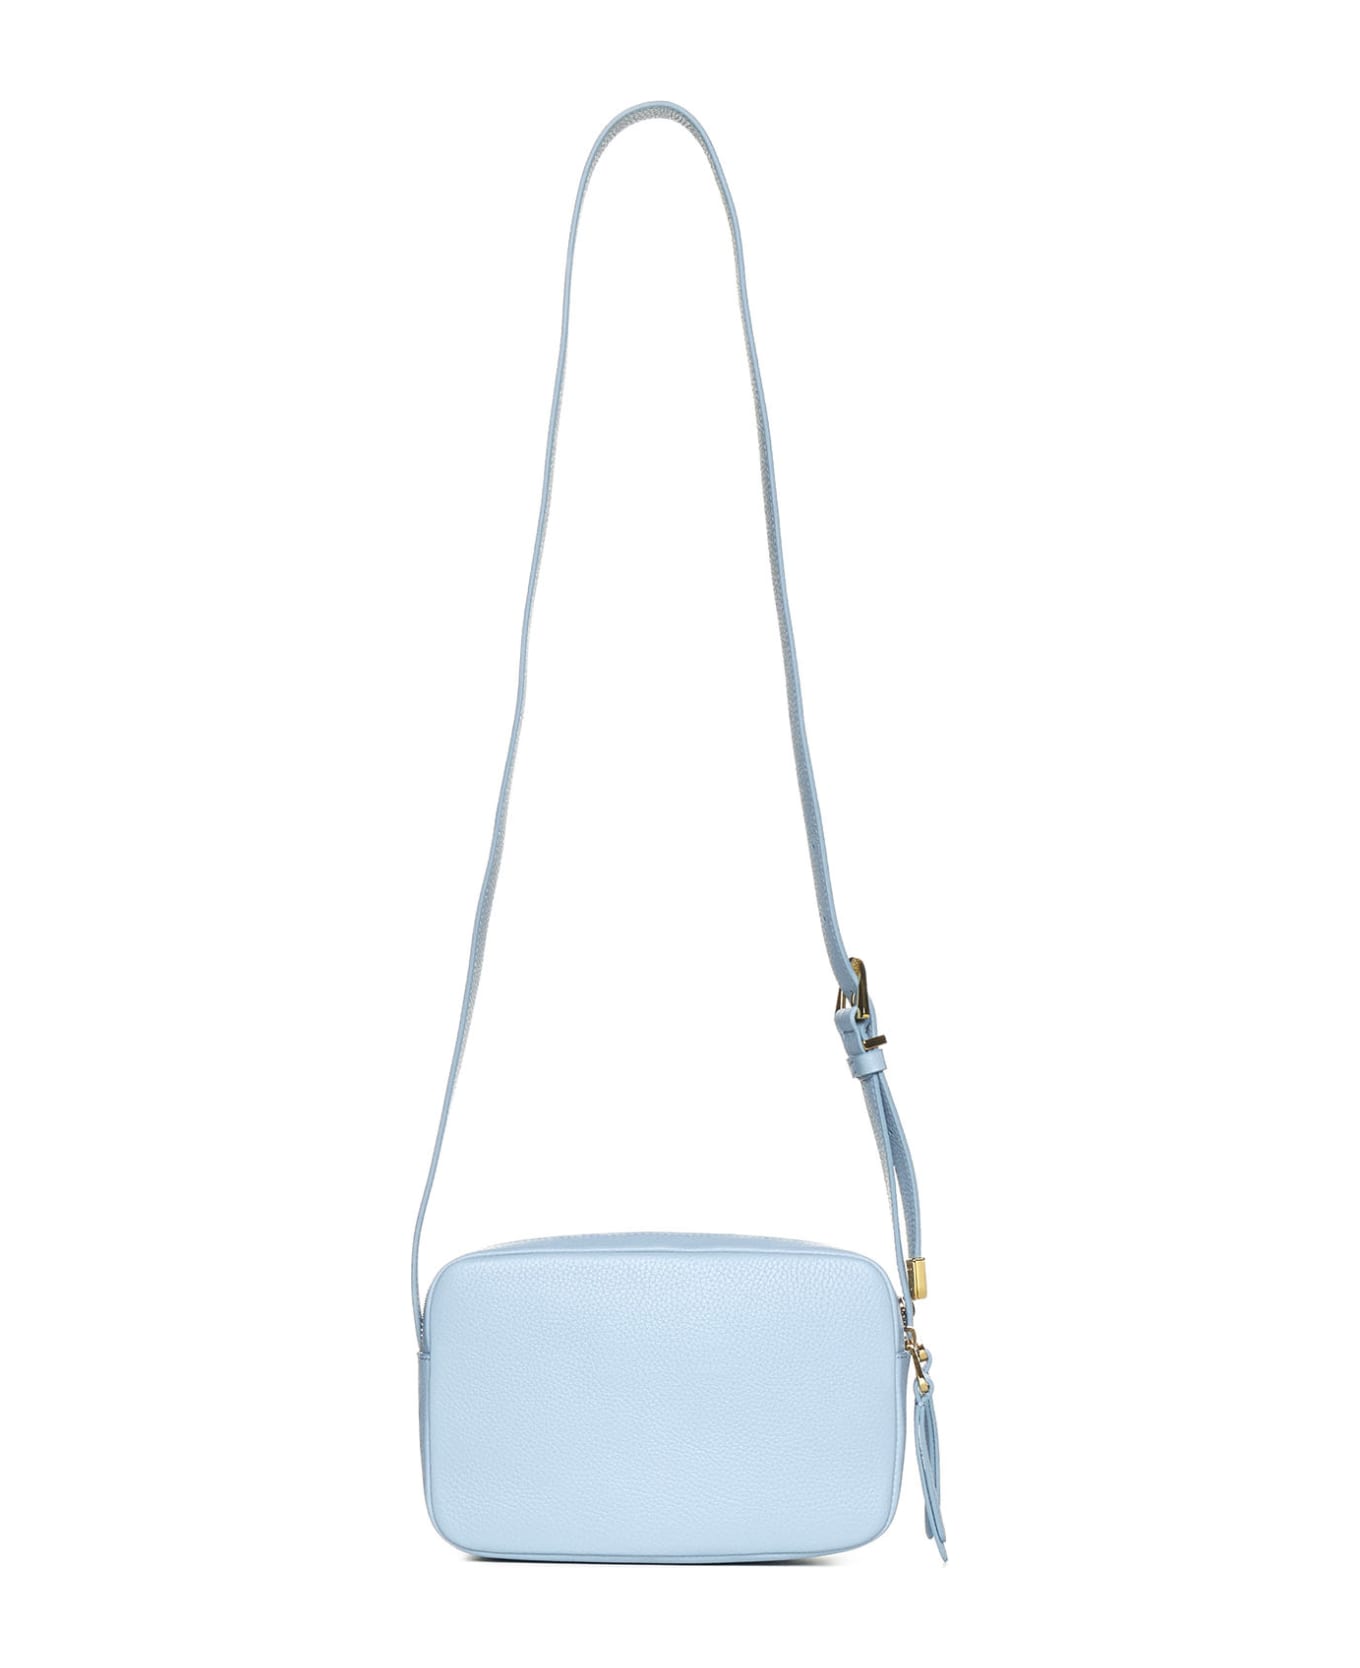 Coccinelle Shoulder Bag - Aquarelle blue